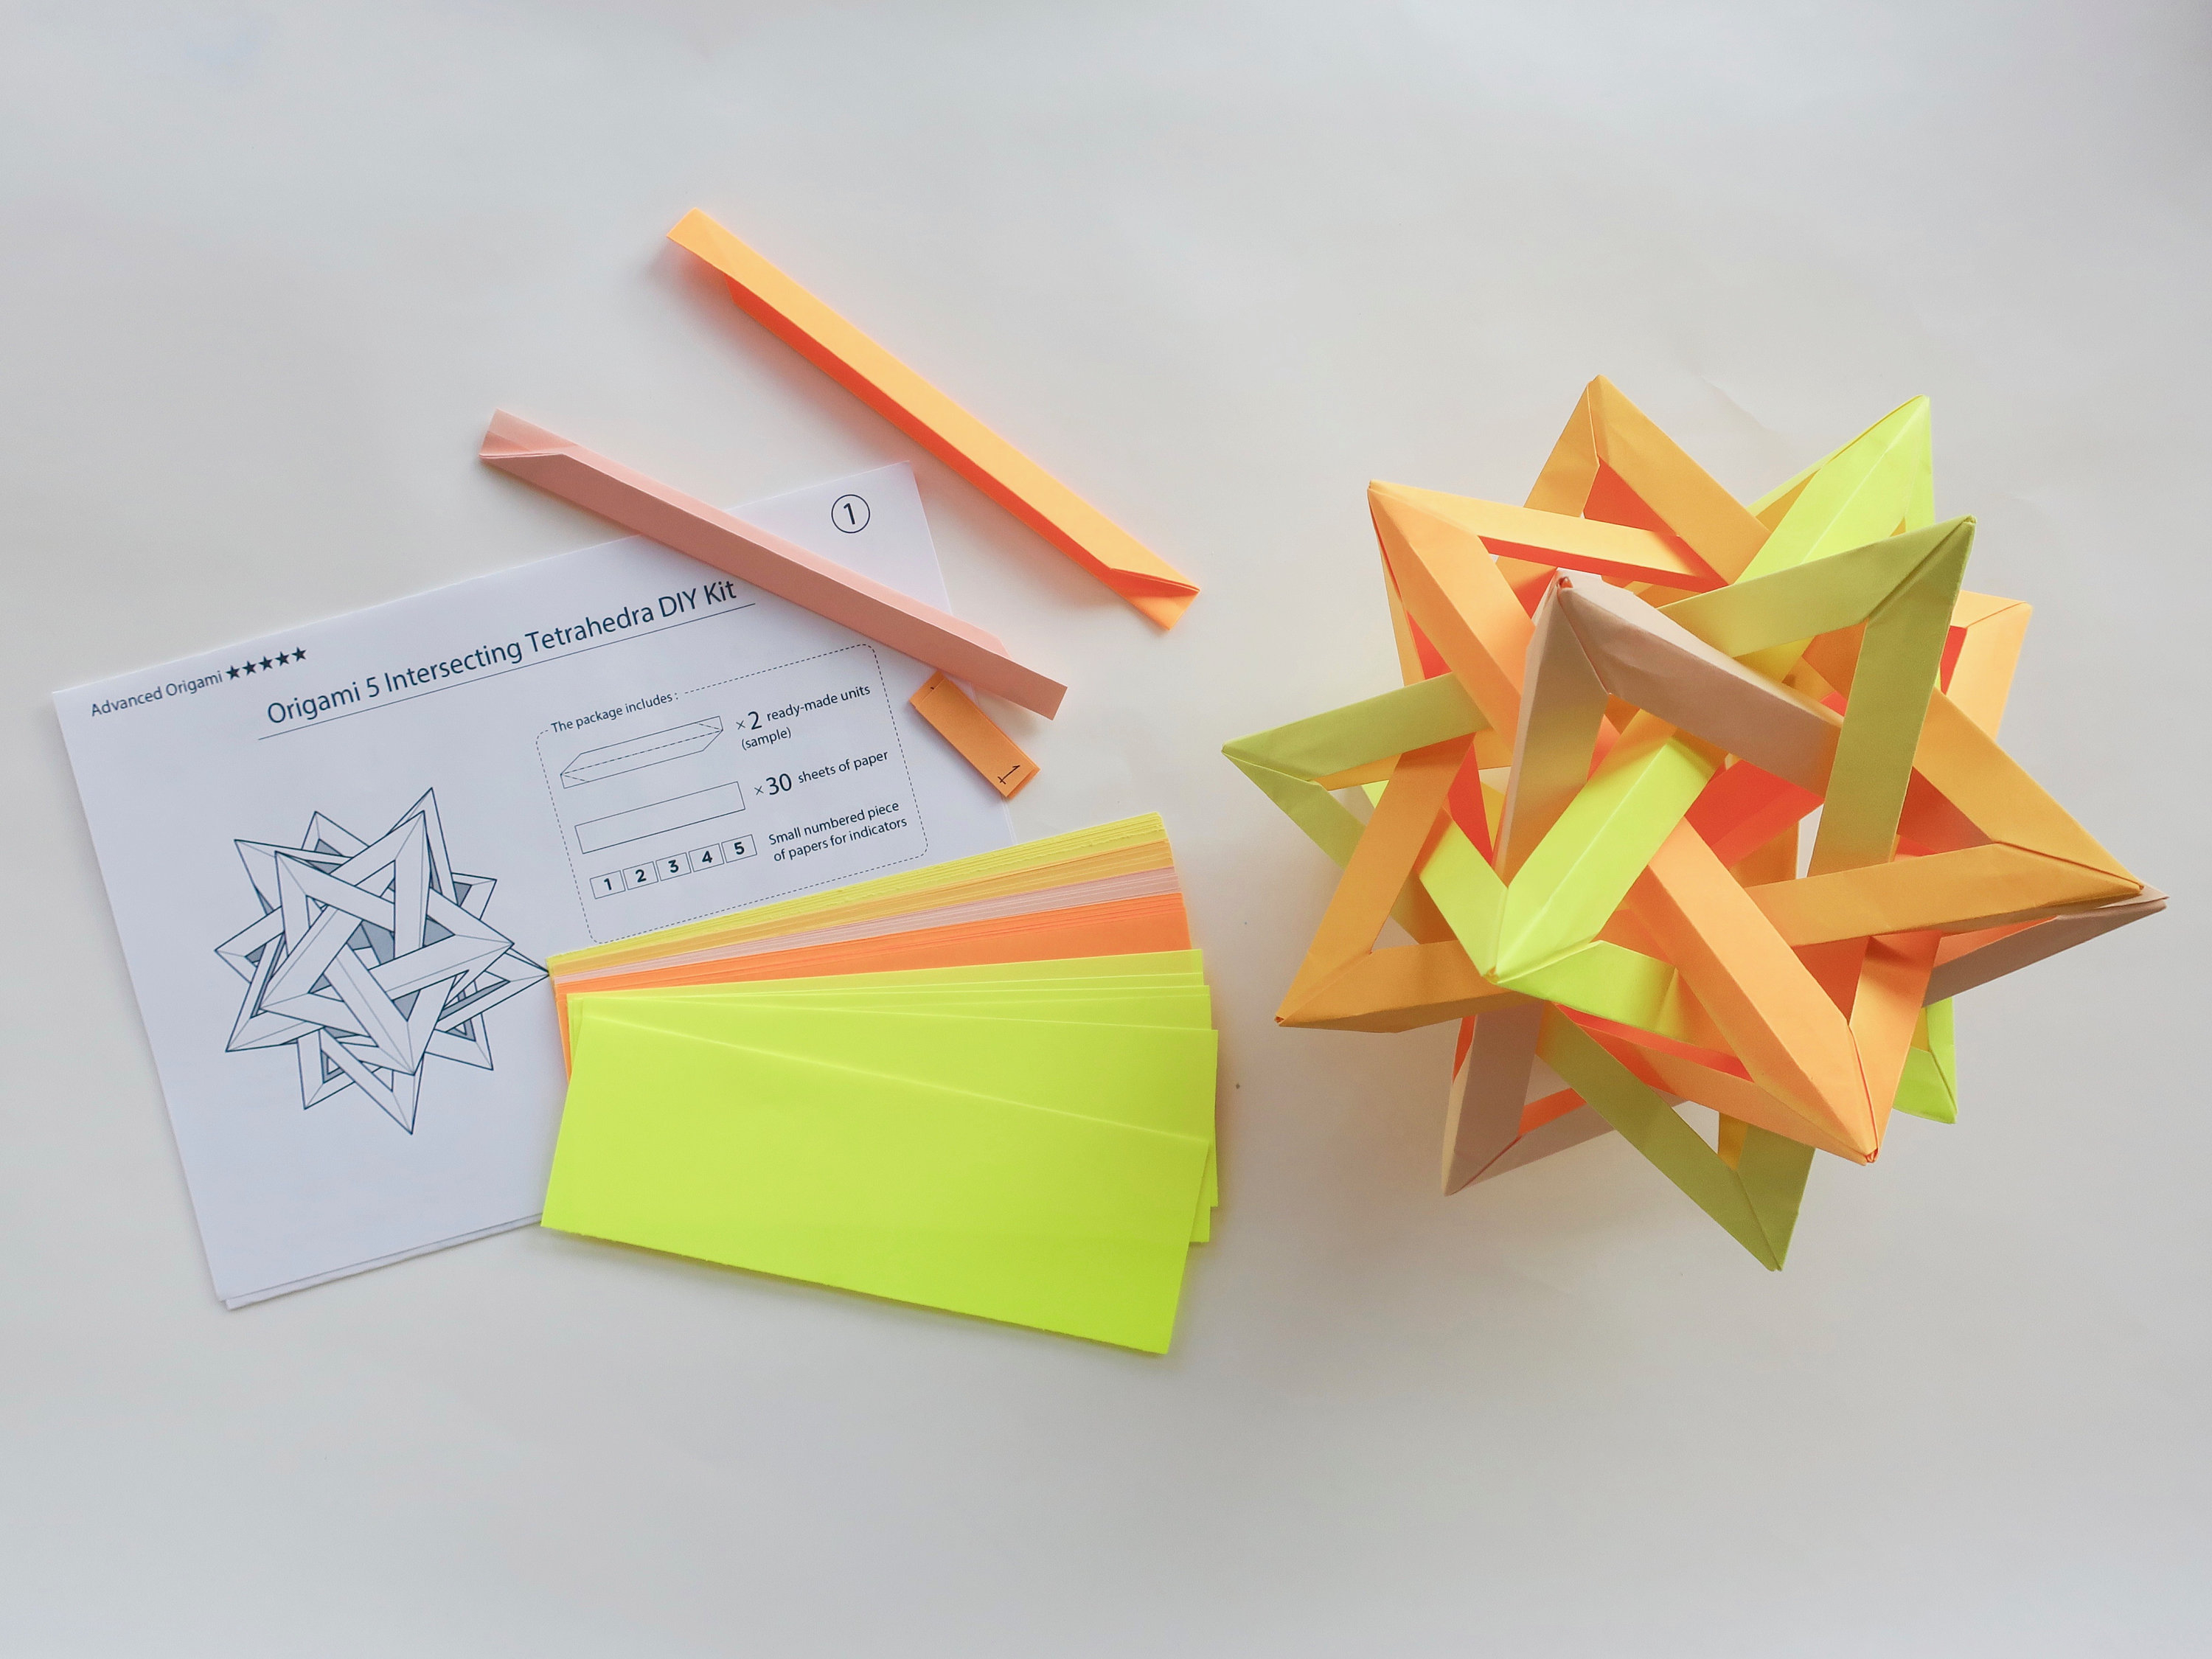 5 Note Origami Diy Self Assembly Kit Origami 5 Intersecting Tetrahedra Kit Sunrise Yellow Orange Beige Paper Crafts Diy Origami Kit Crafting